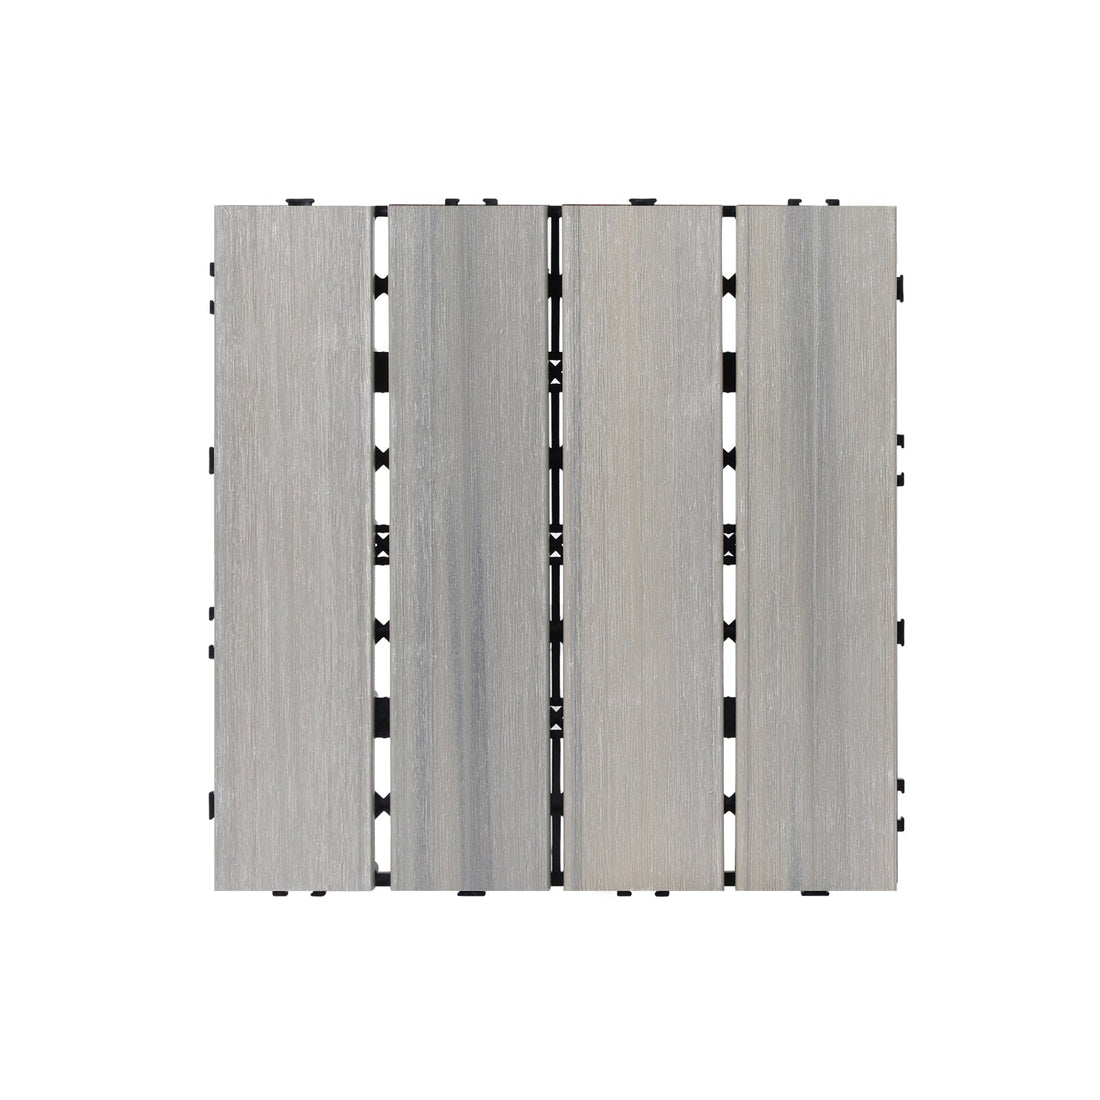 WPC Wood Decking Tile - Indoor & Outdoor Tile - Sky Grey - Lazy Tiles